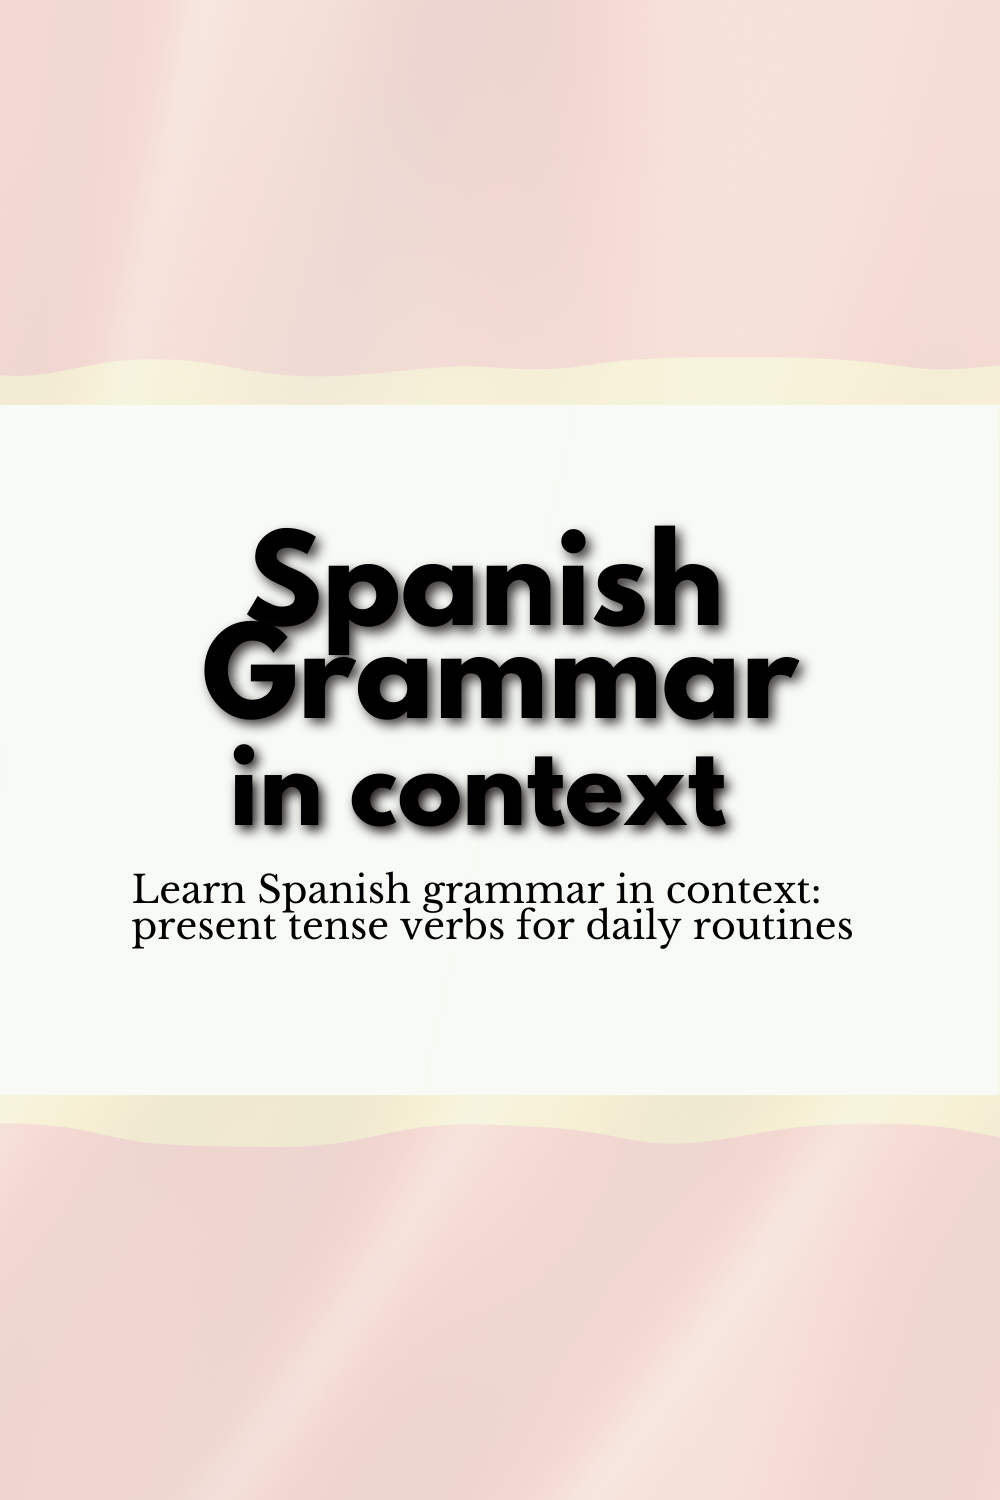 Spanish grammar in context: present tense verbs